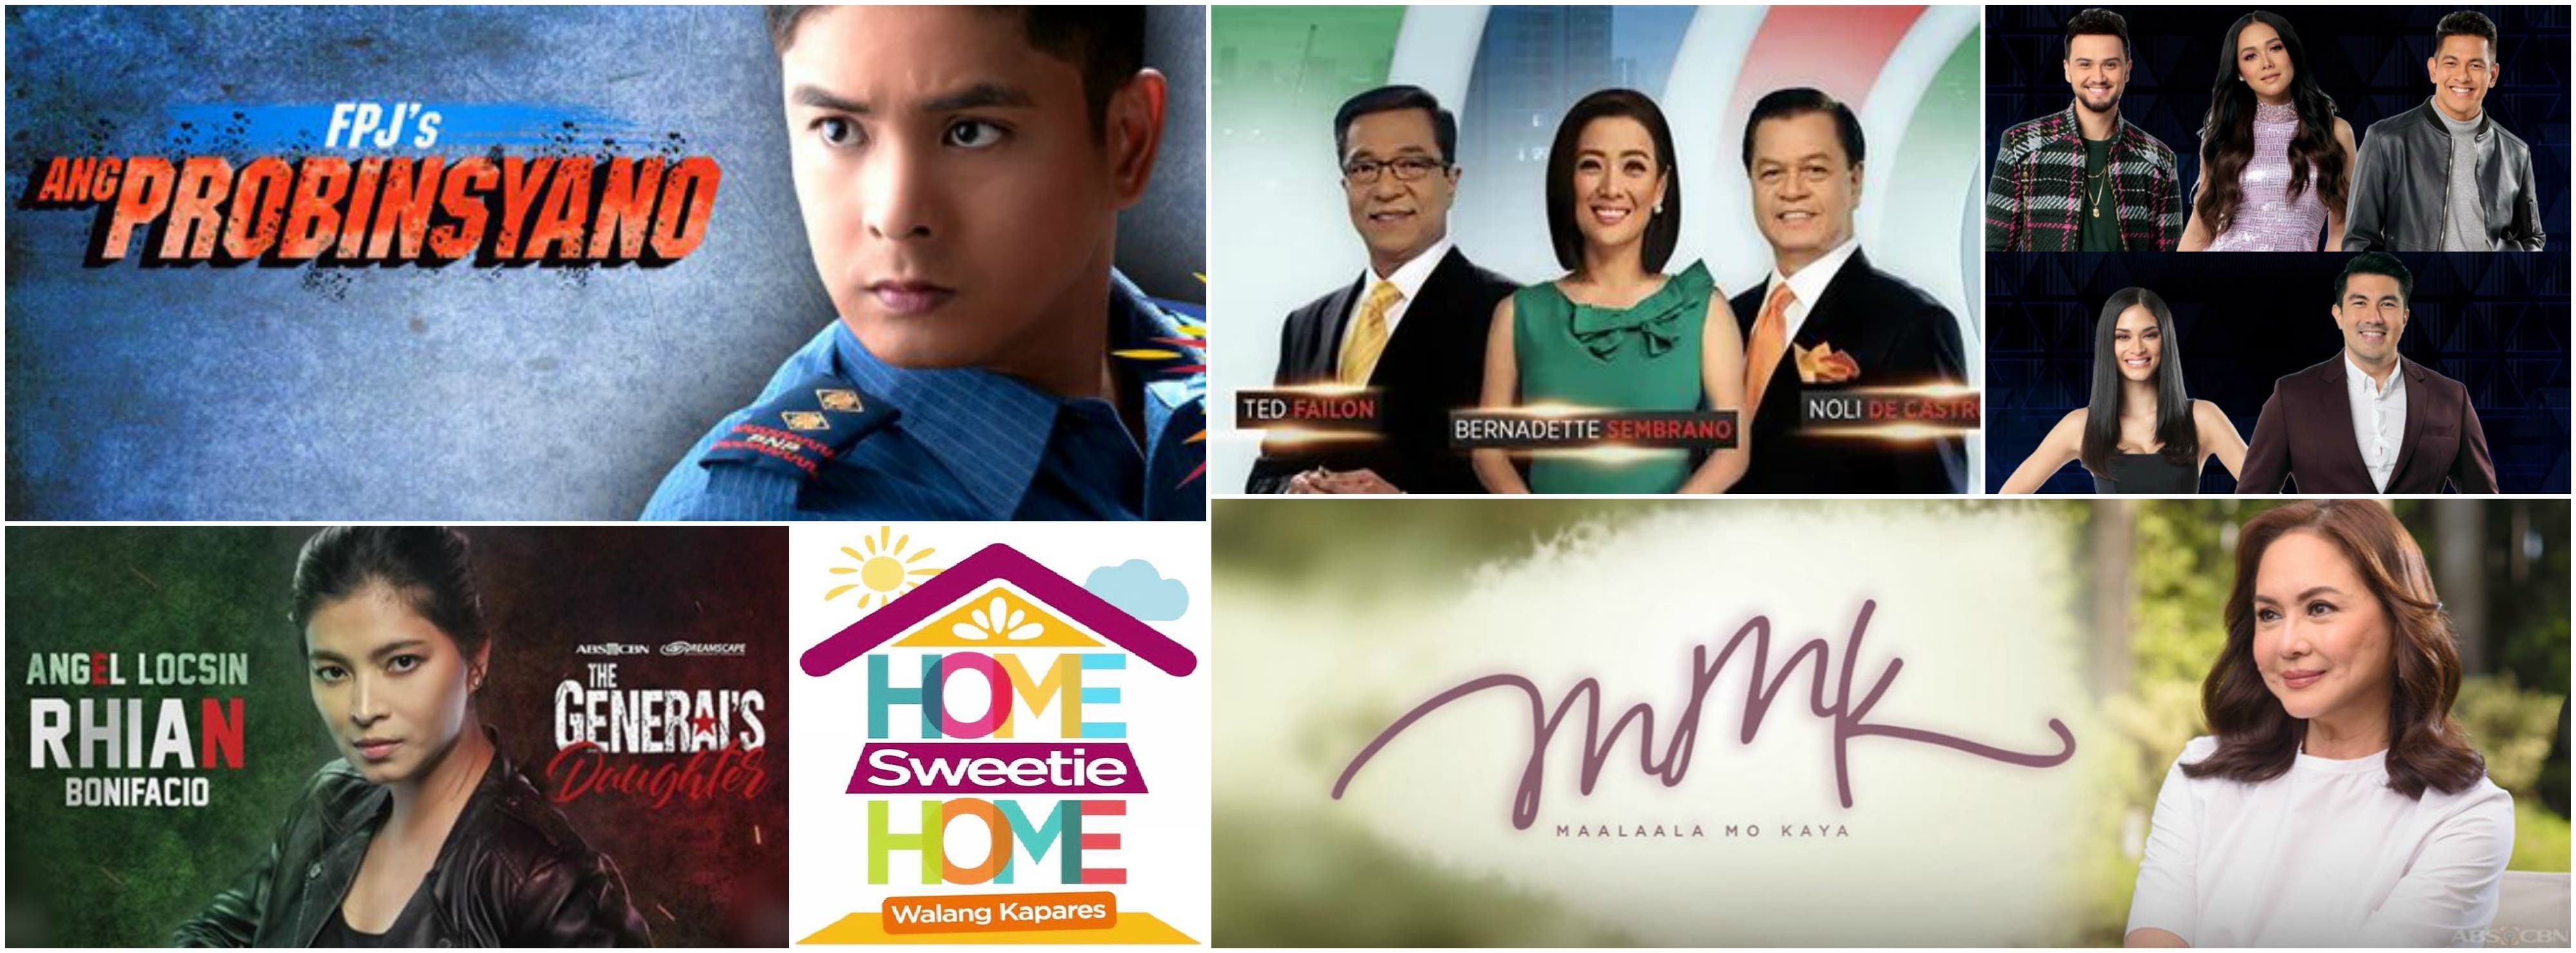 The Philippine Drama Series vrogue.co